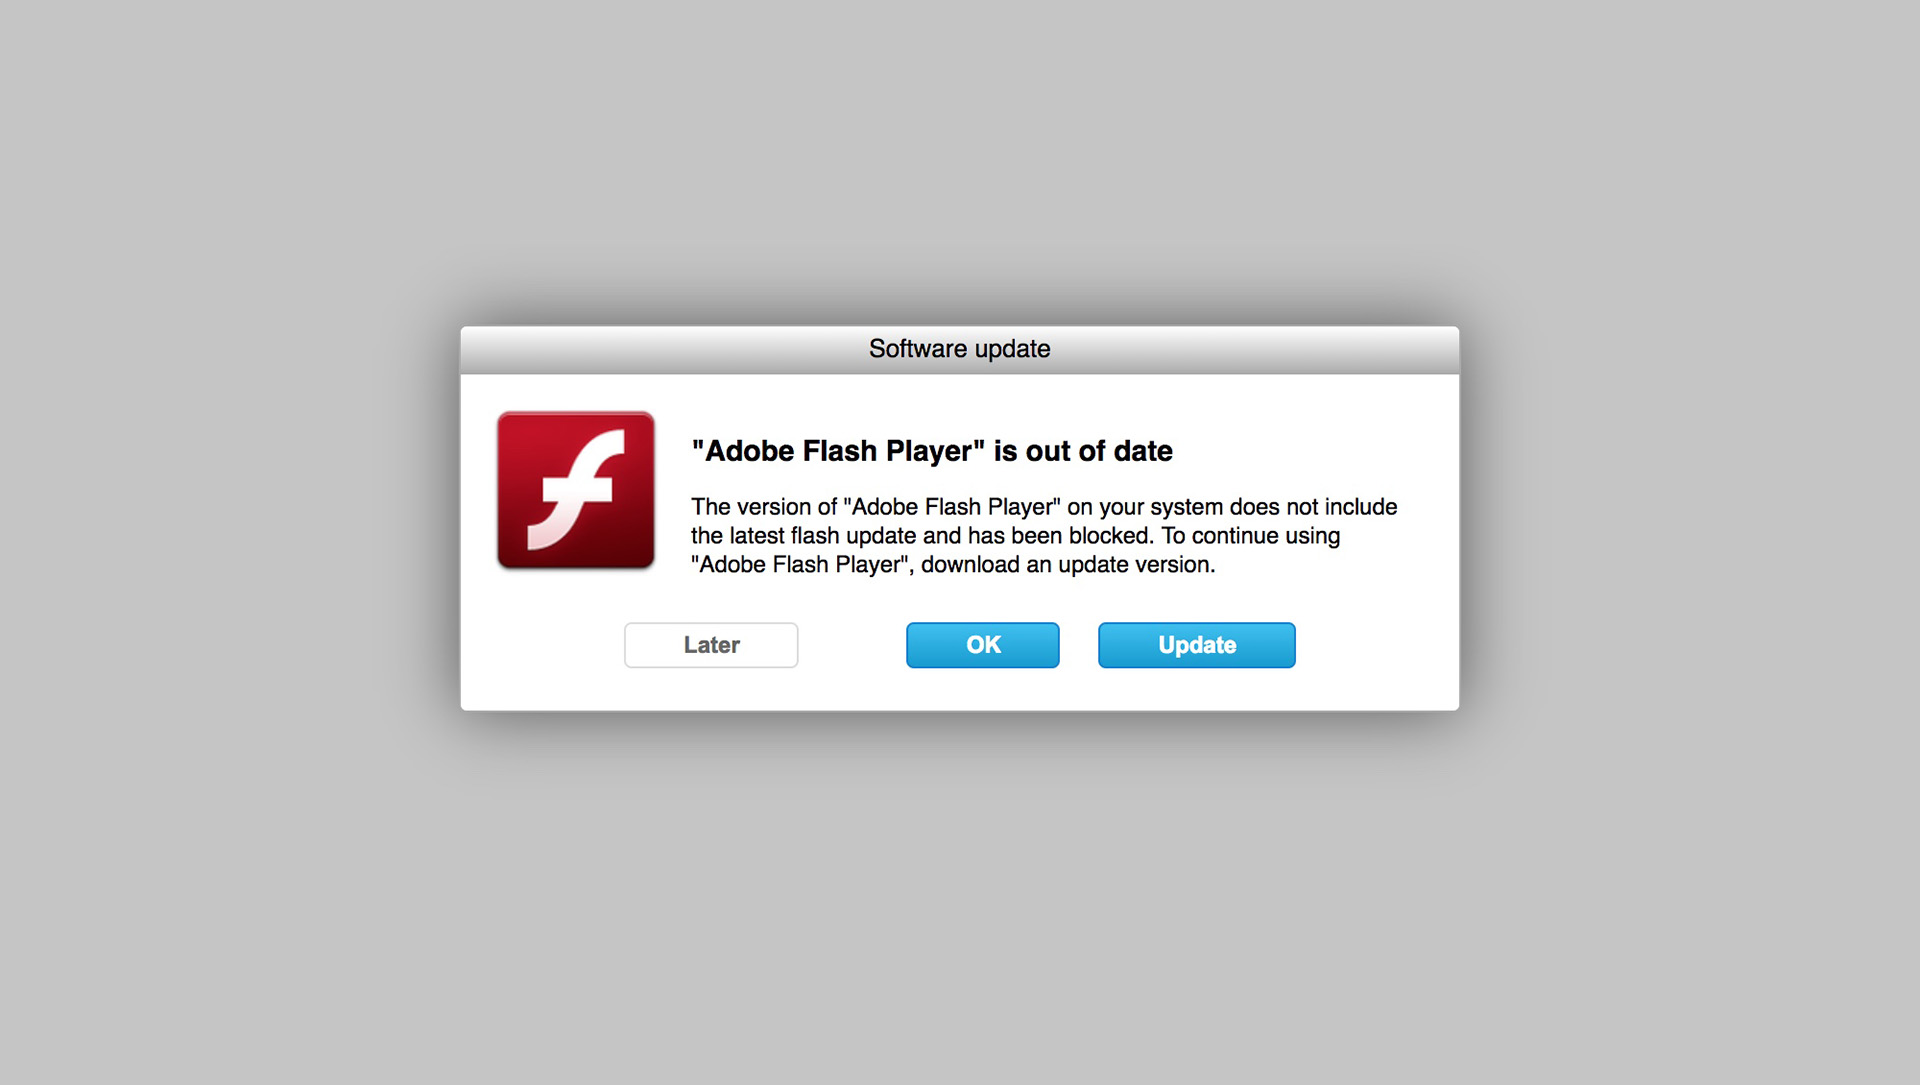 Adobe flash player 9 free download